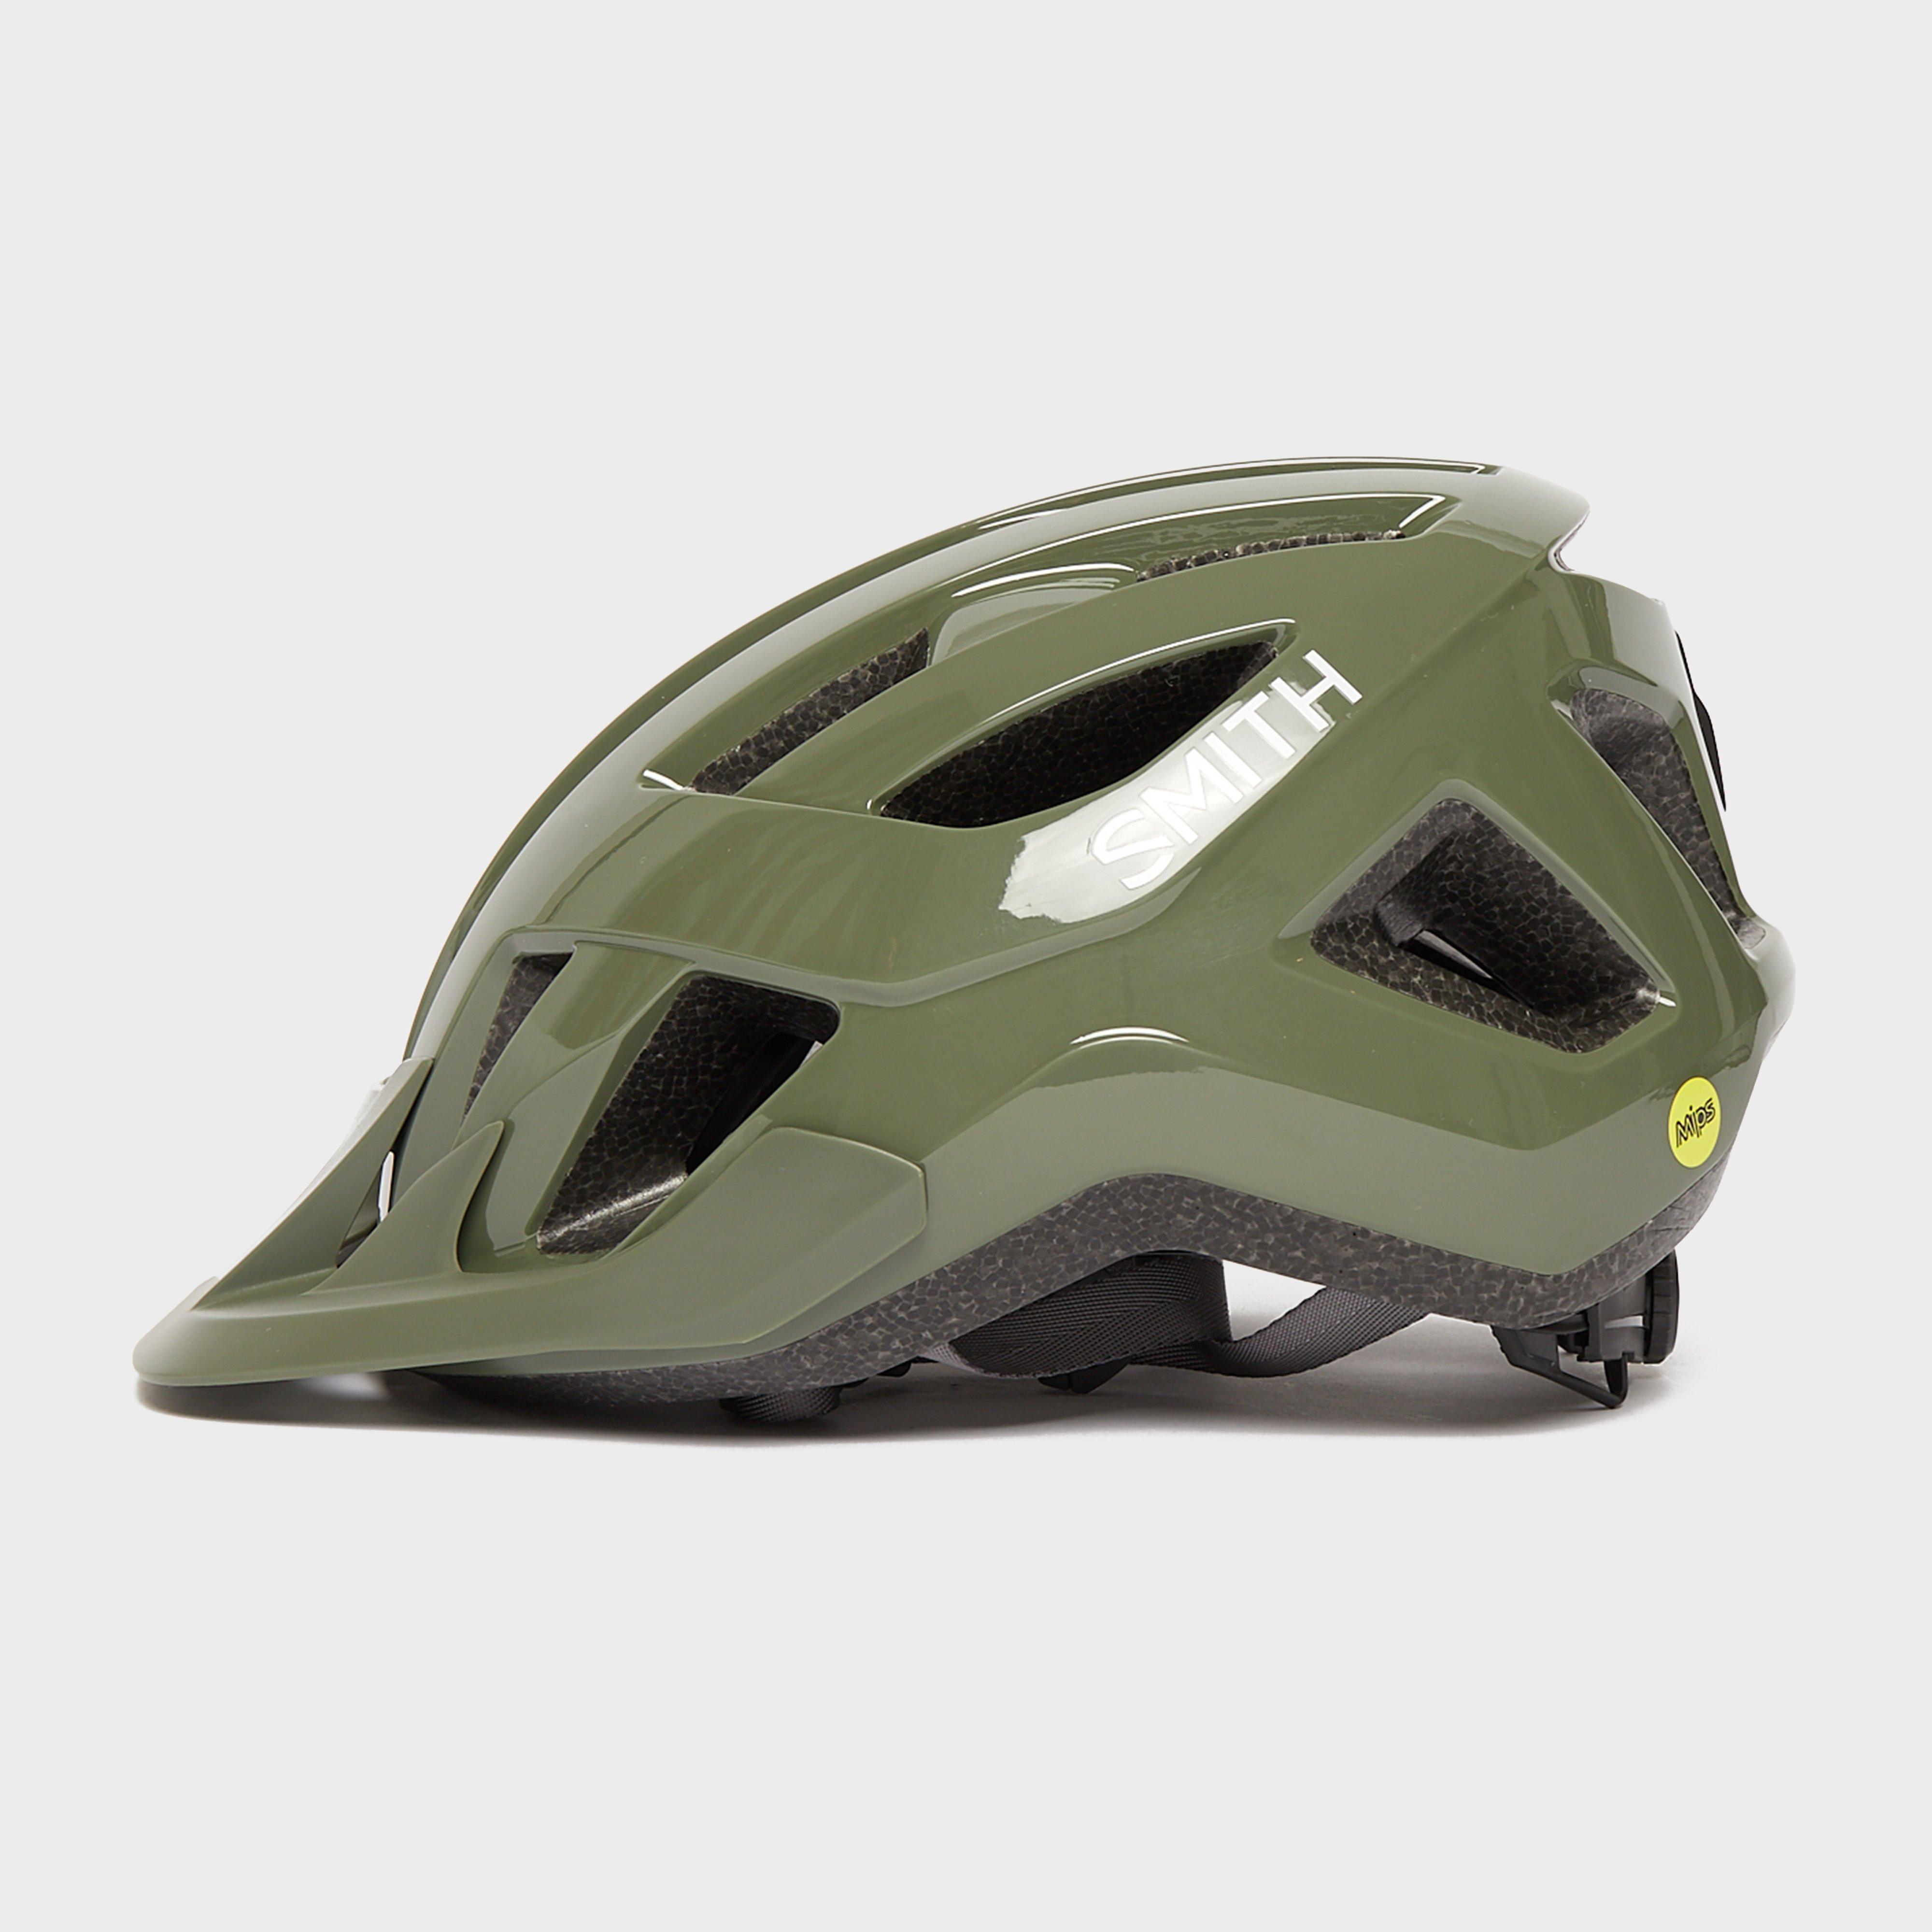  SMITH MIPS Mountain Bike Helmet, Green